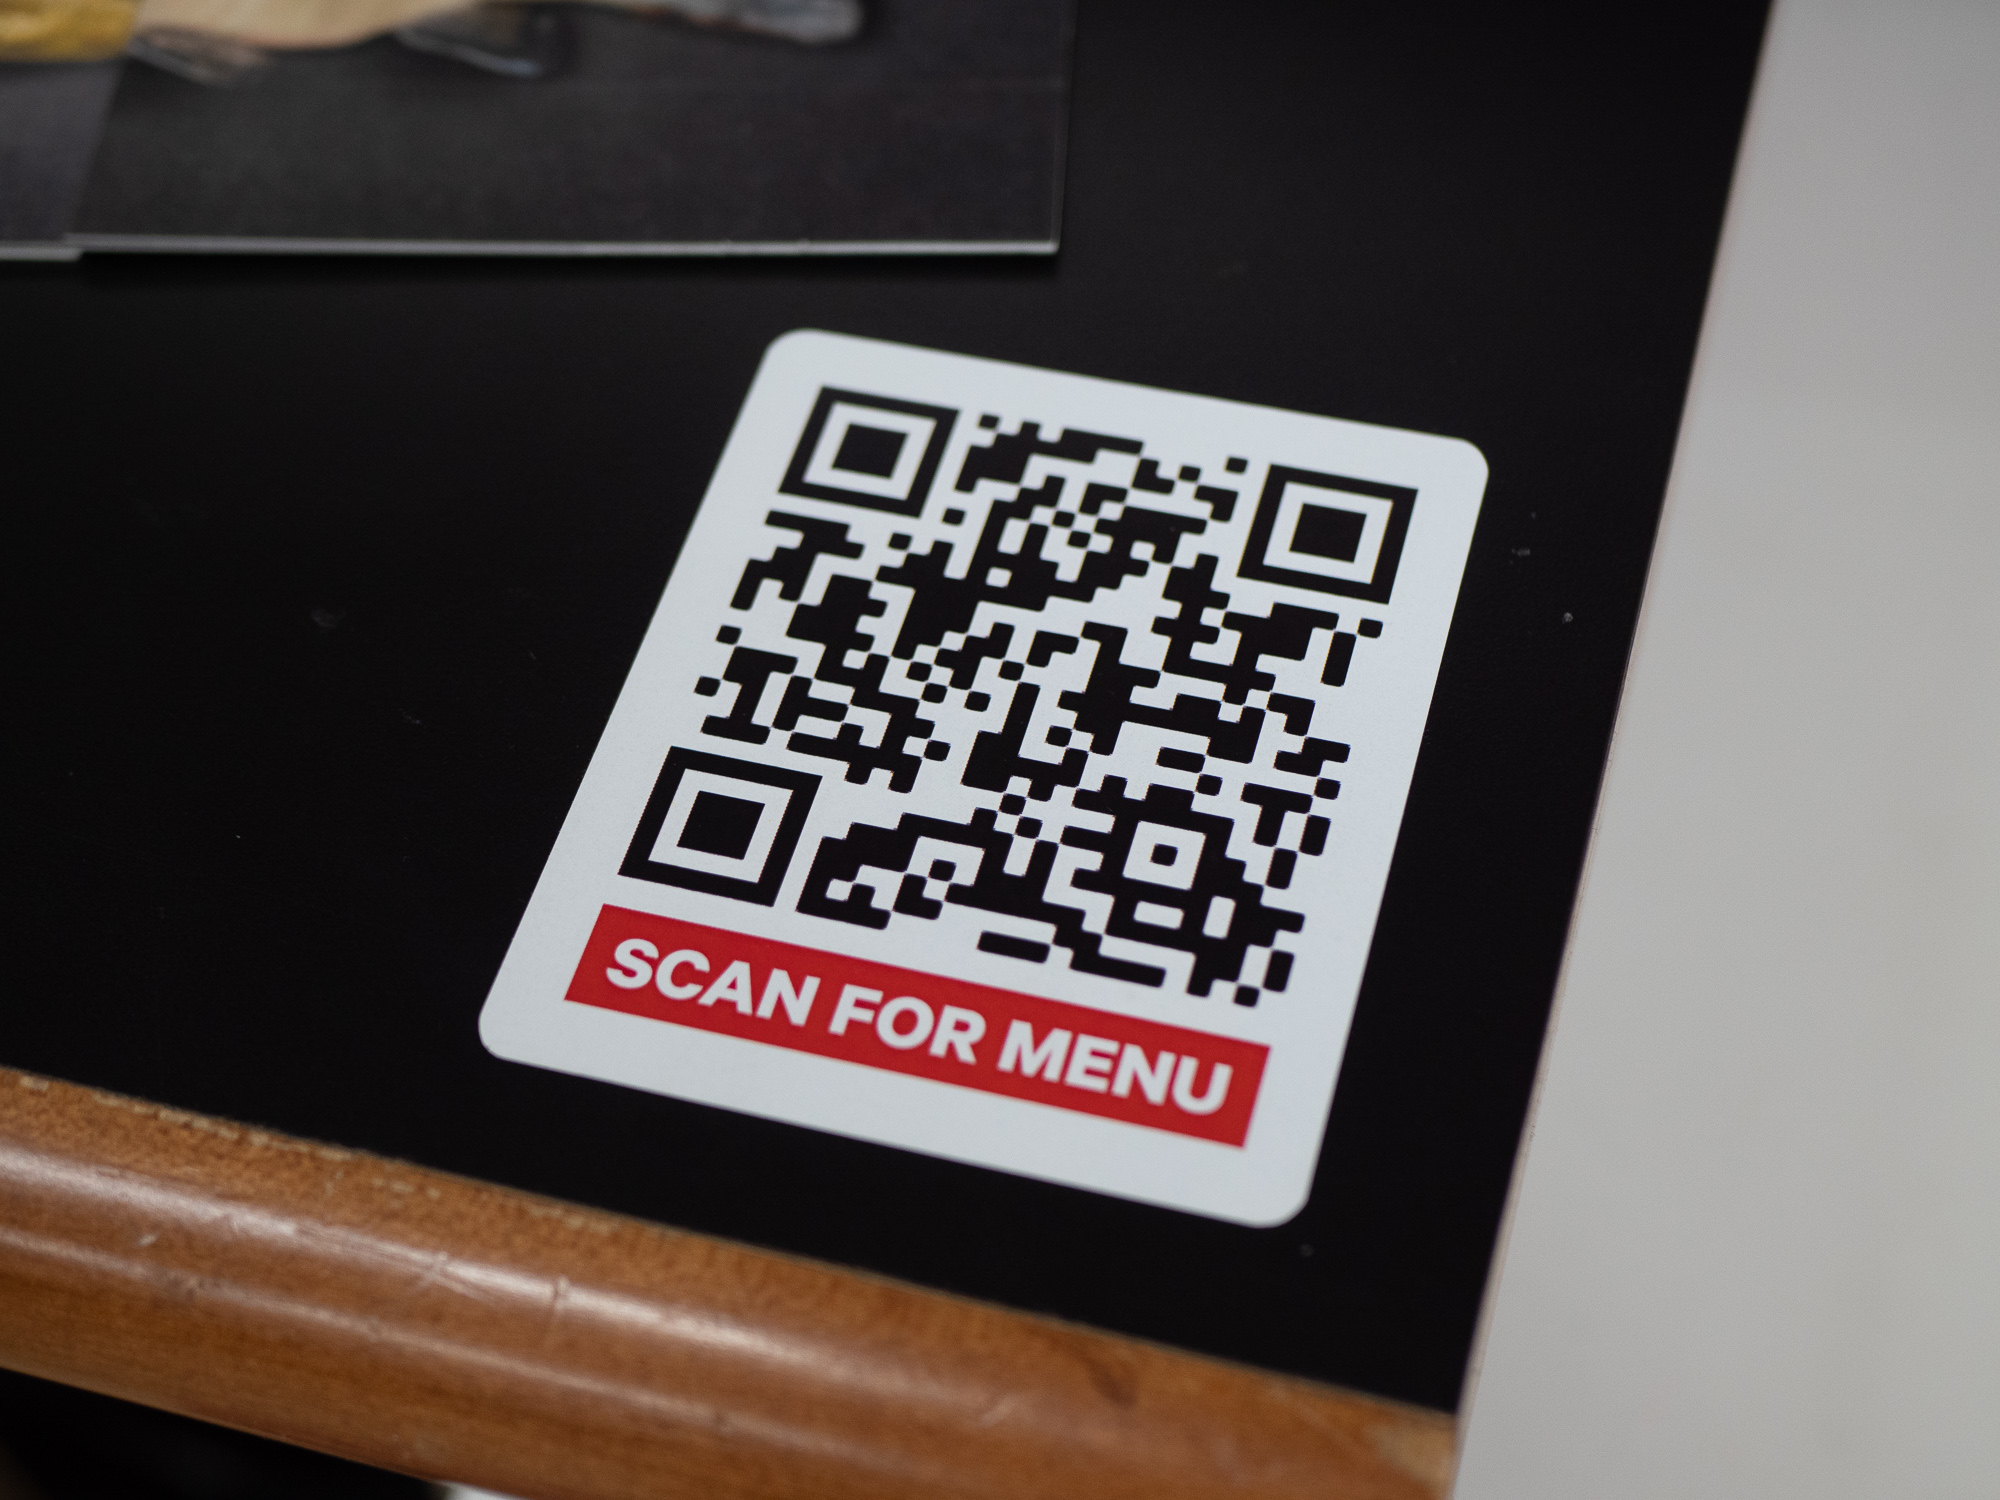 Qr код цвет. Наклейка с QR кодом. Наклейки для QR кодов. QR коды в ресторанах. Наклейка с ЙК кодом на стол.